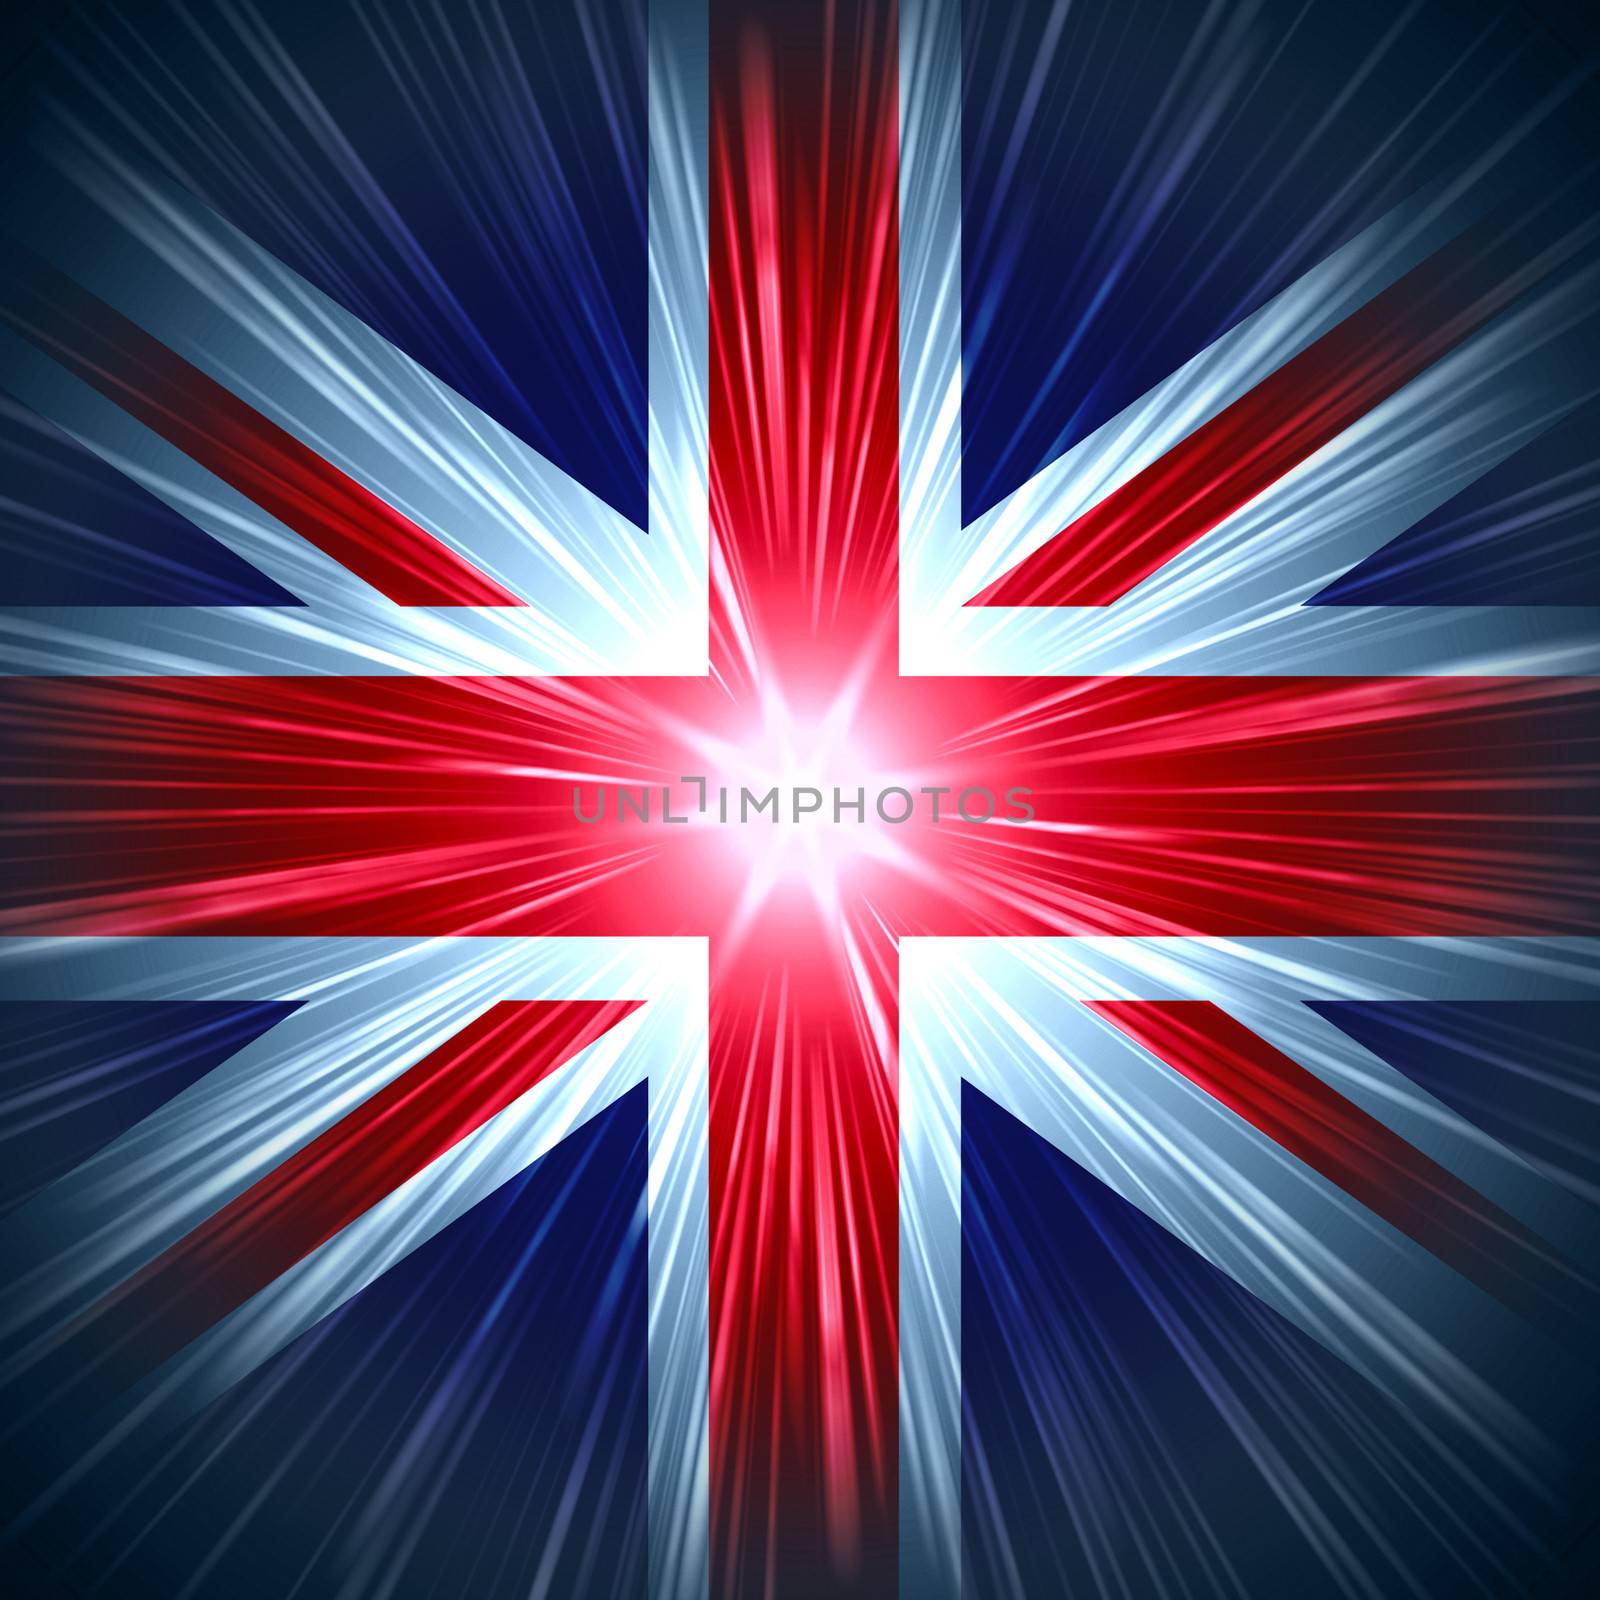 British Union Jack national flag with light rays